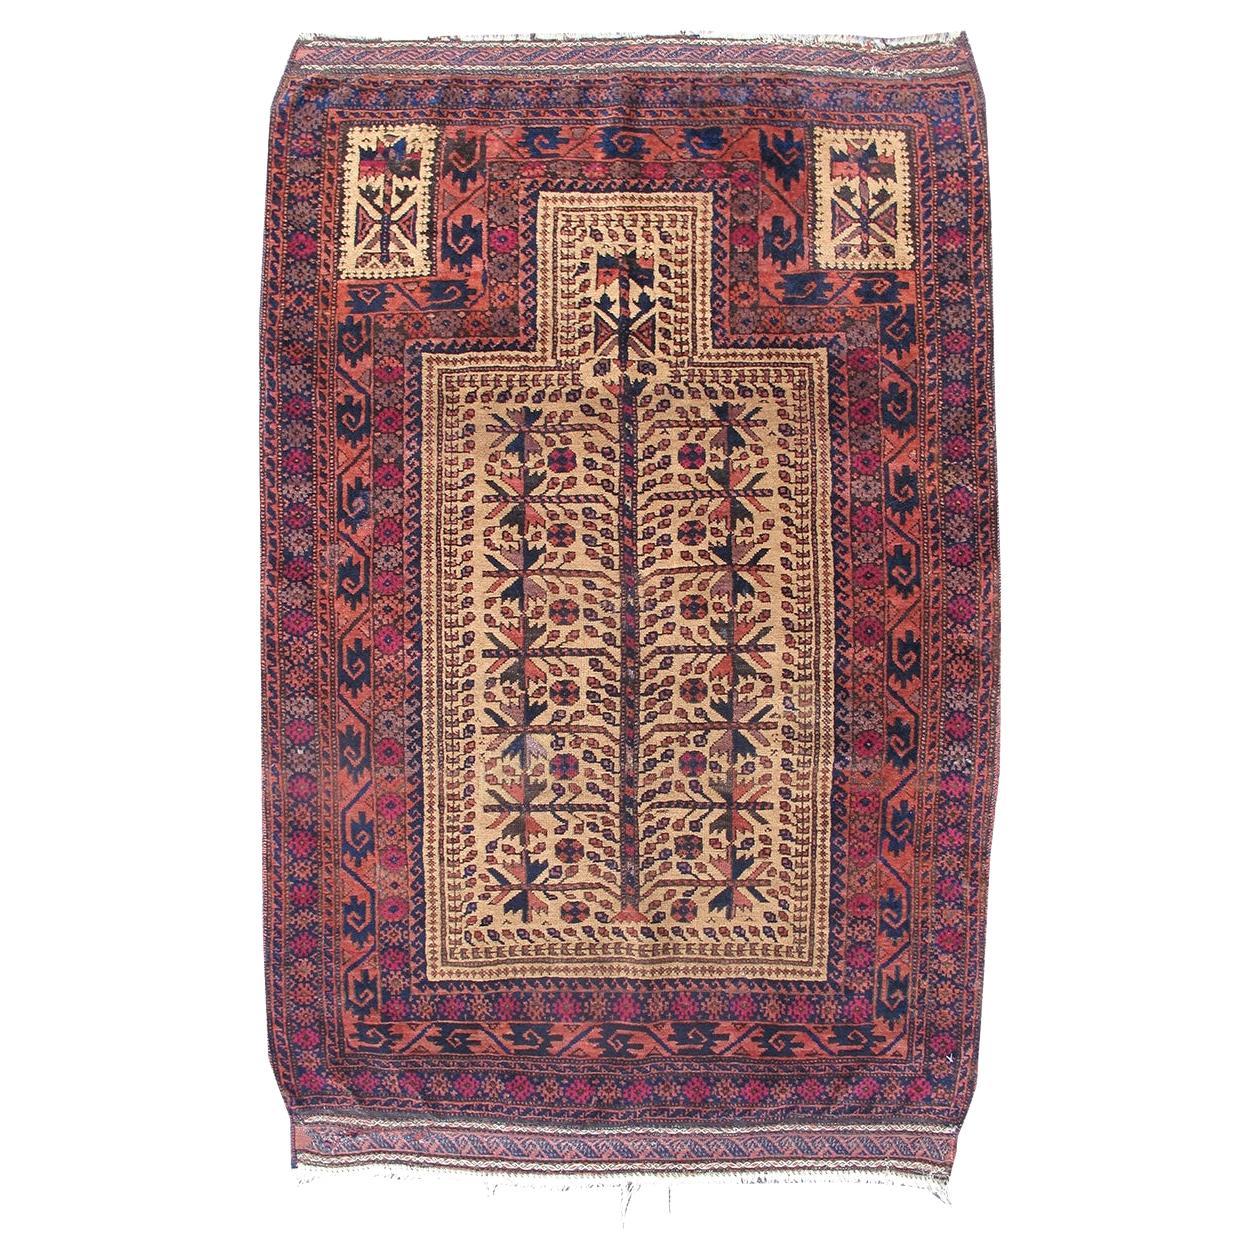 Antique Persian Baluch Prayer Rug, c. 1900